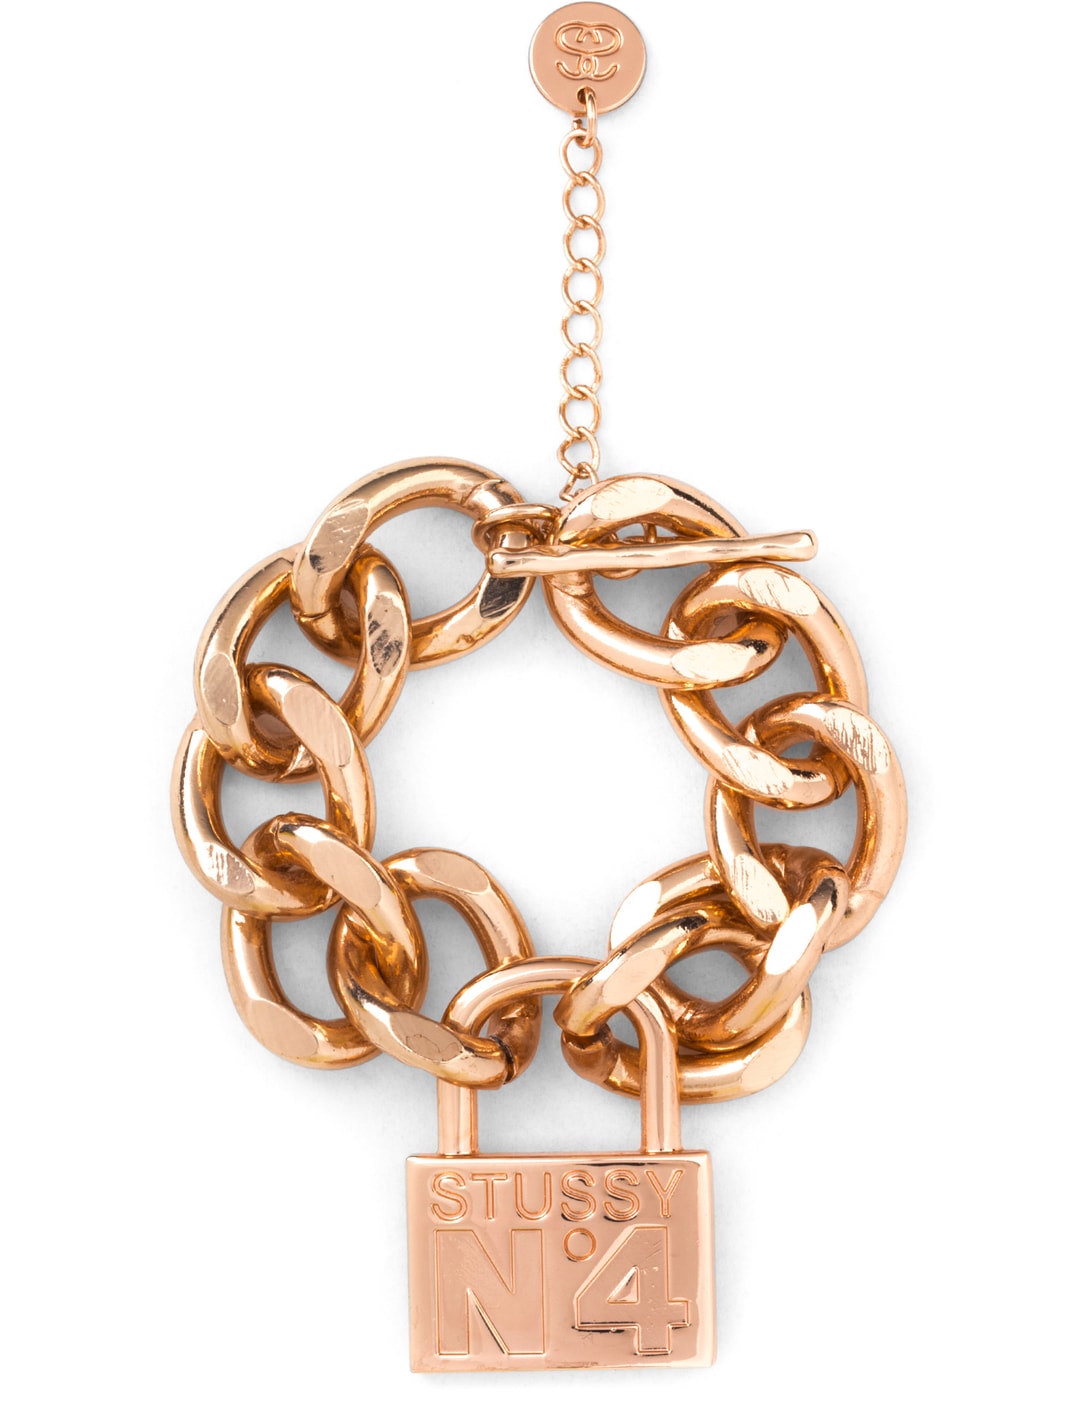 Stüssy - No. 4 Lock Bracelet | HBX - Globally Curated Fashion and ...